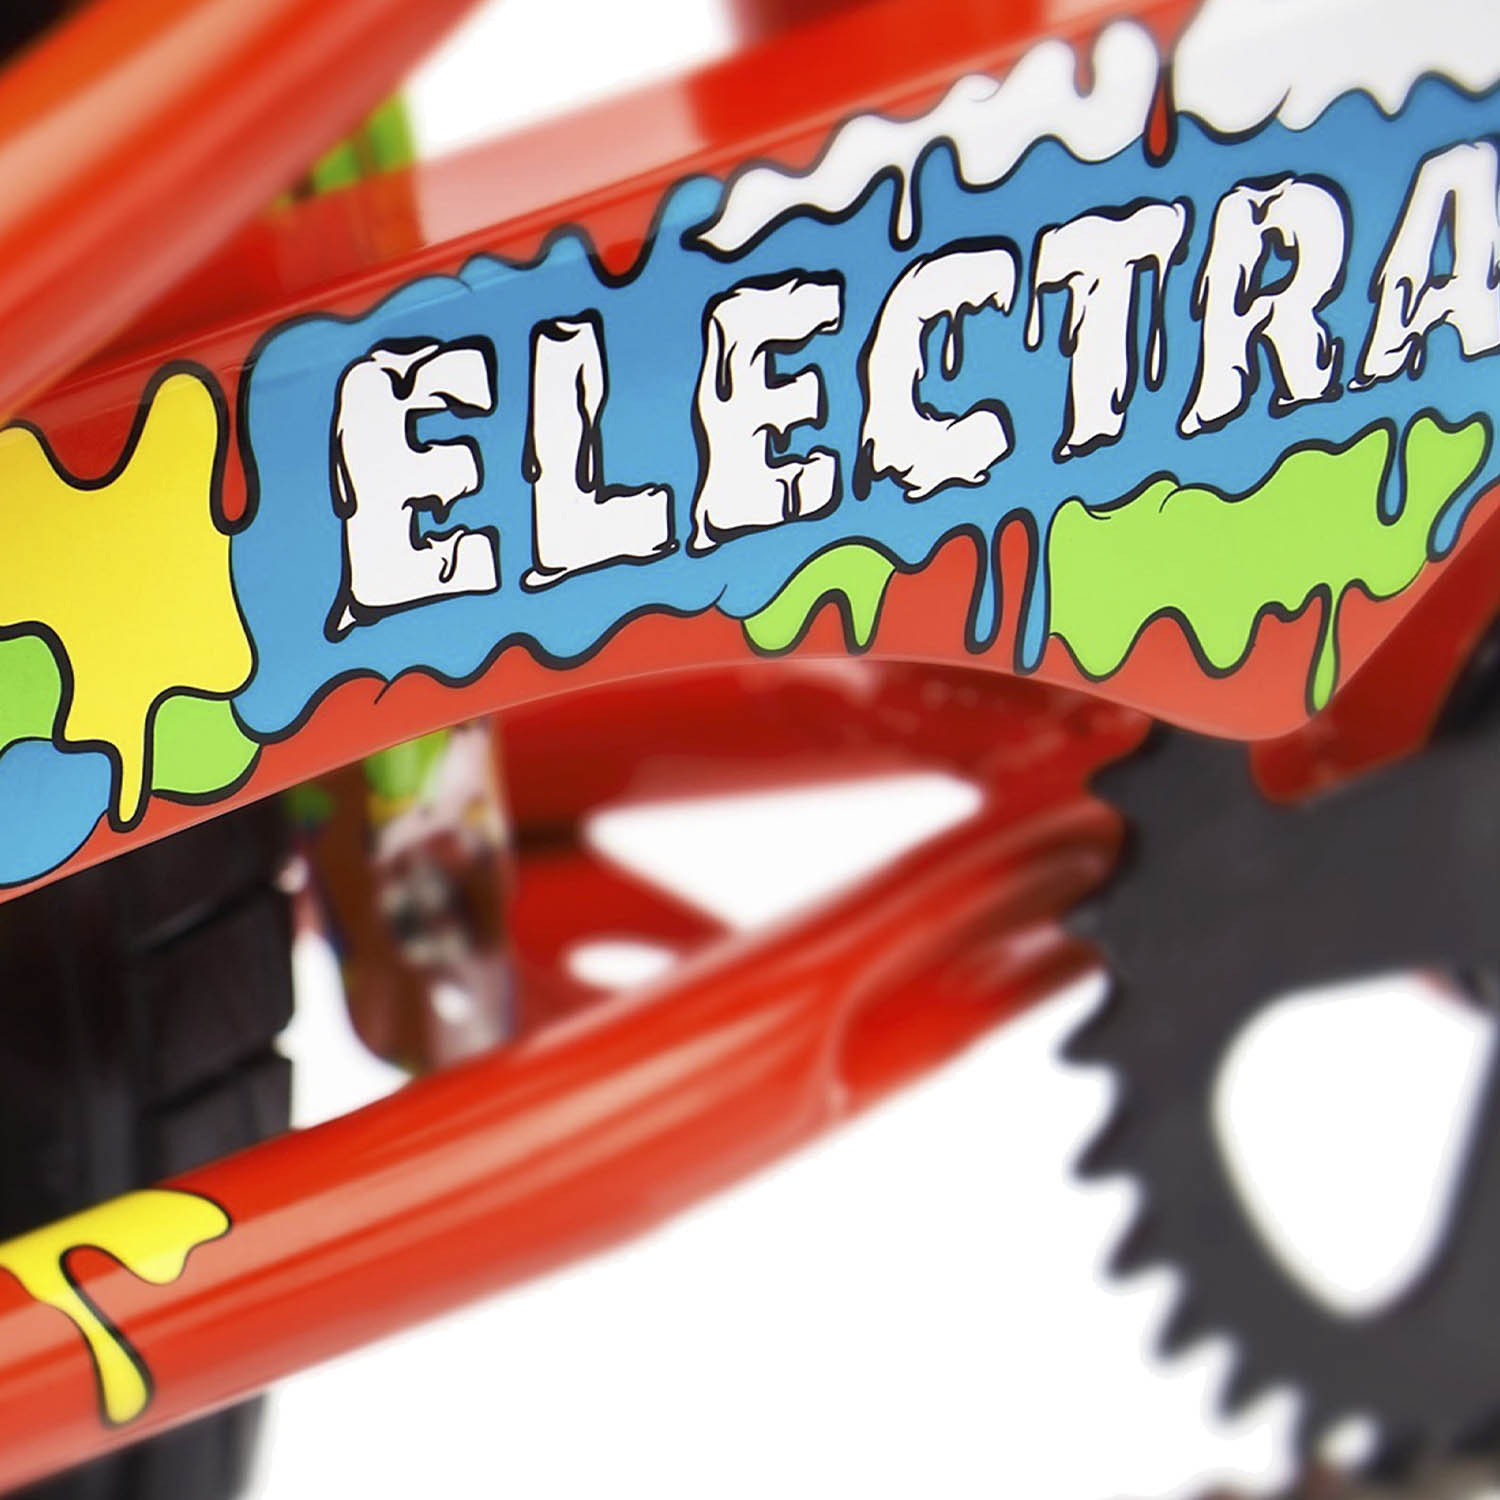 Велосипед Electra Graffiti Drip 1 2022 Orange